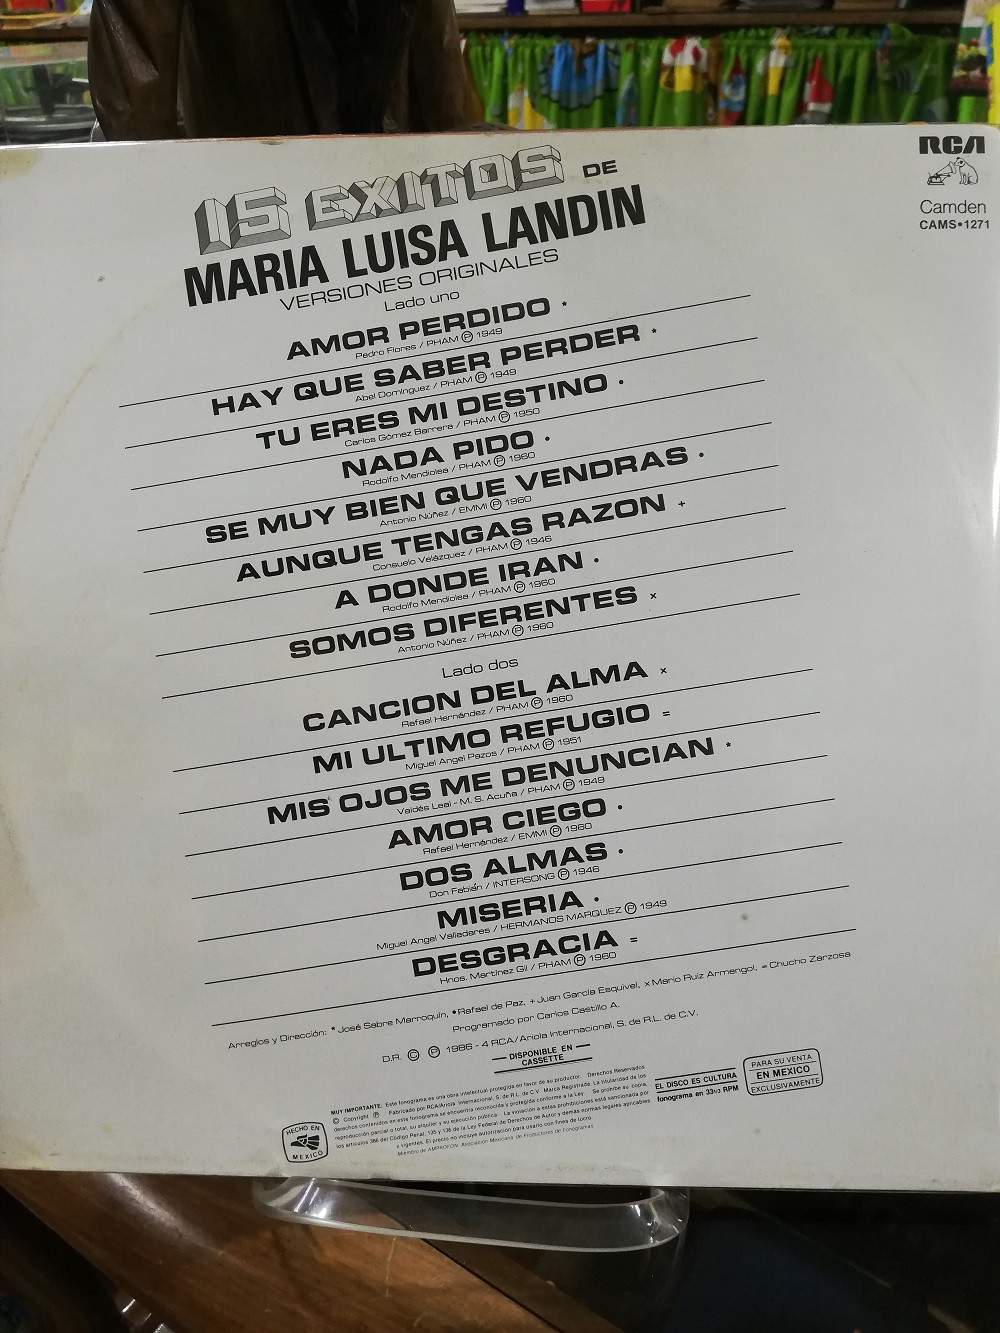 Imagen LP MARIA LUISA LANDIN - 15 EXITOS DE MARIA LUISA LANDIN 2